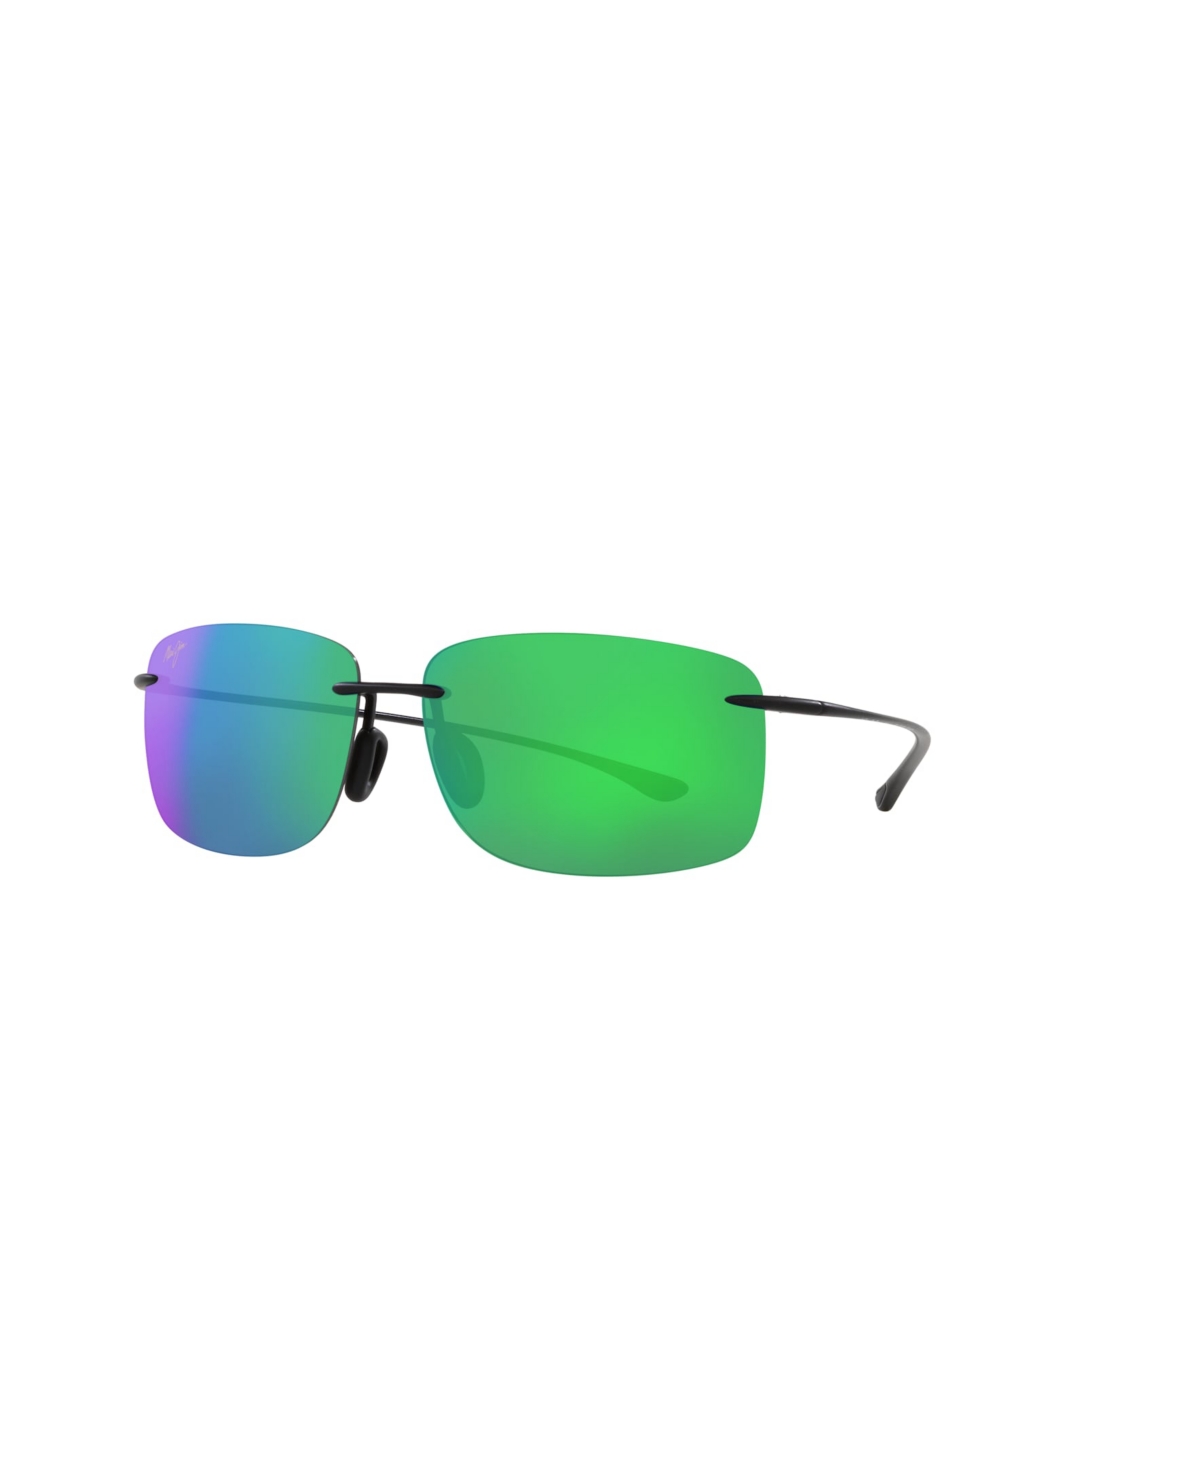 Maui Jim Unisex Sunglasses, Hema Mj000641 In Black Matte